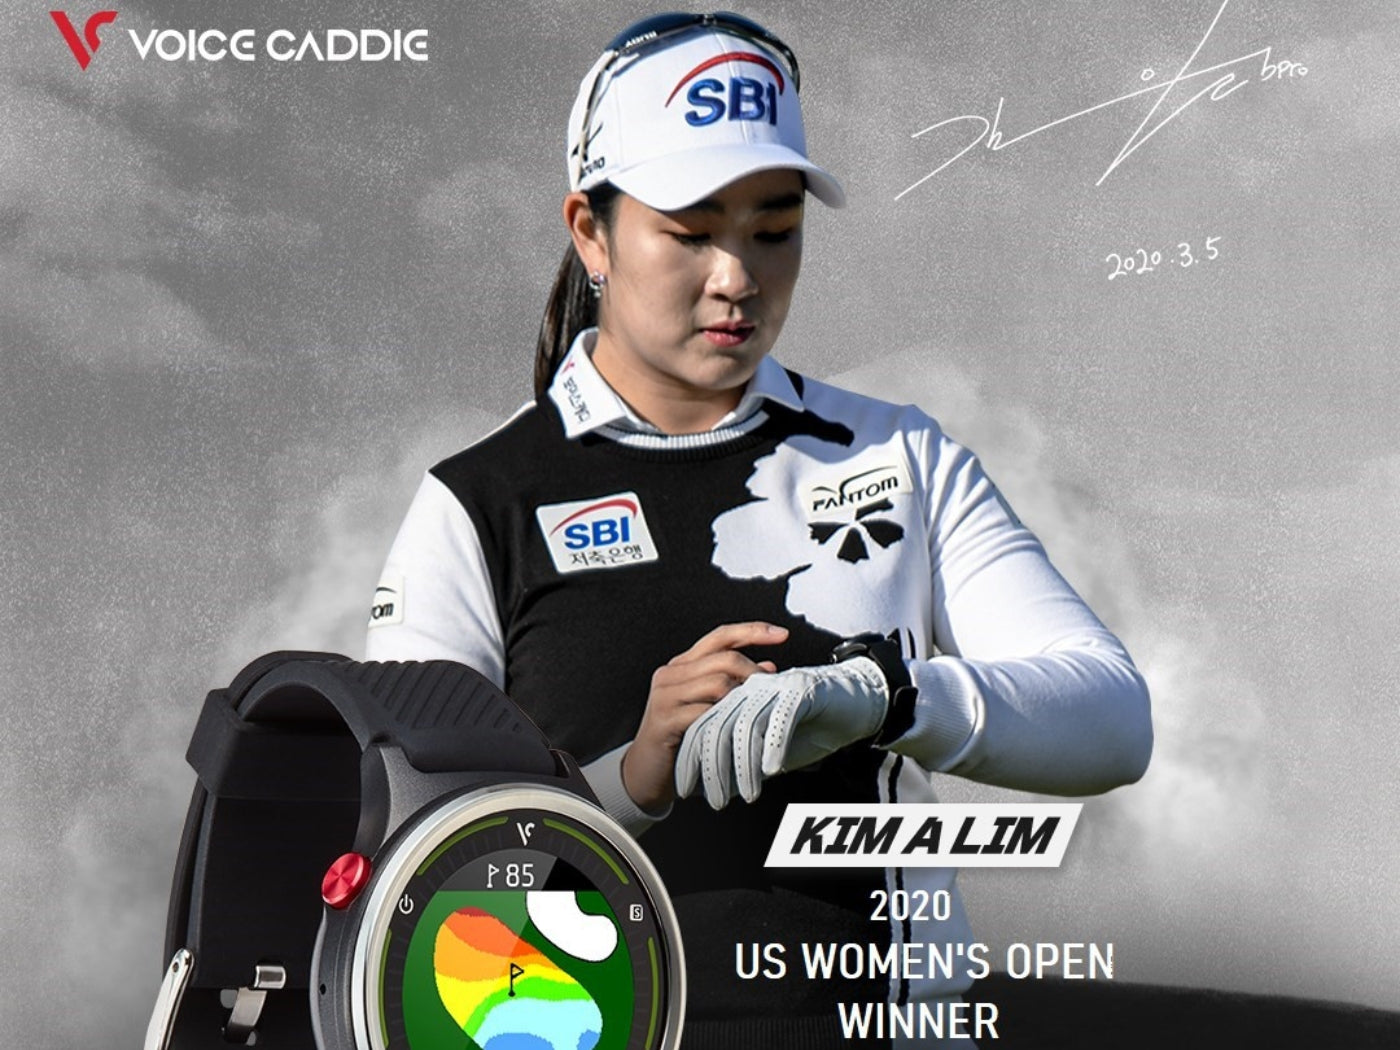 Kim A Lim 2020 US Women's Open Winner wearing Voice Caddie T7